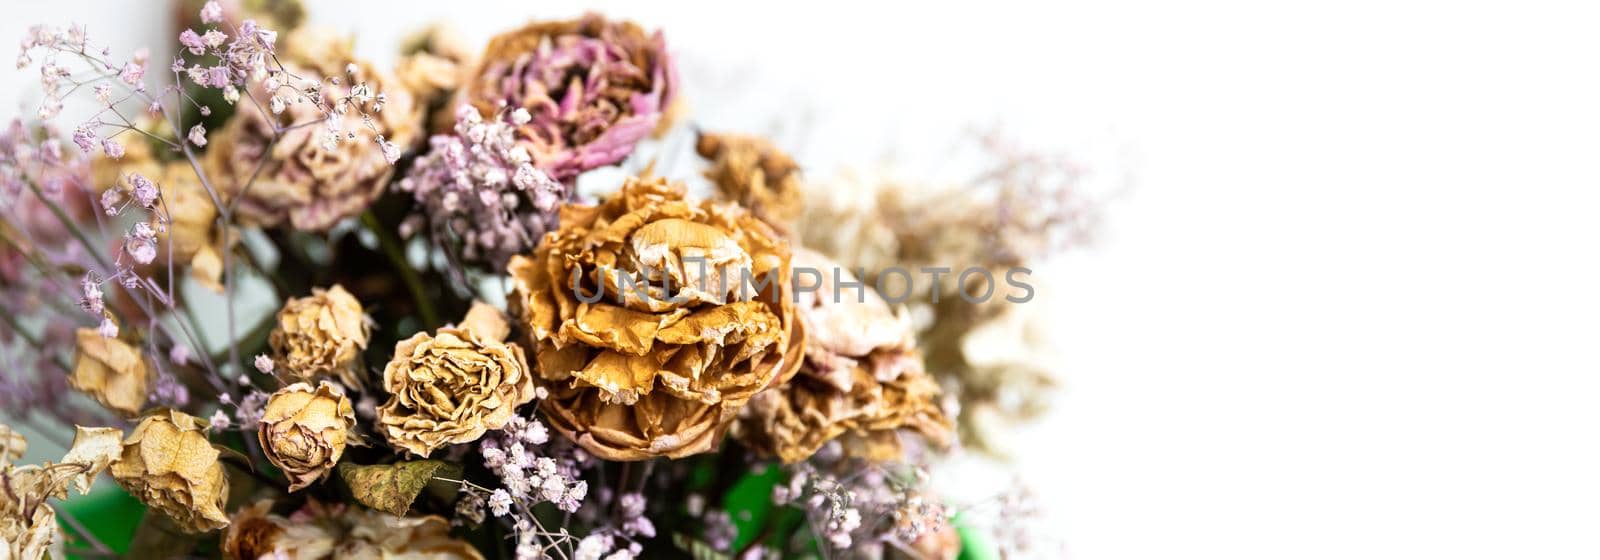 Dry bouquet by palinchak